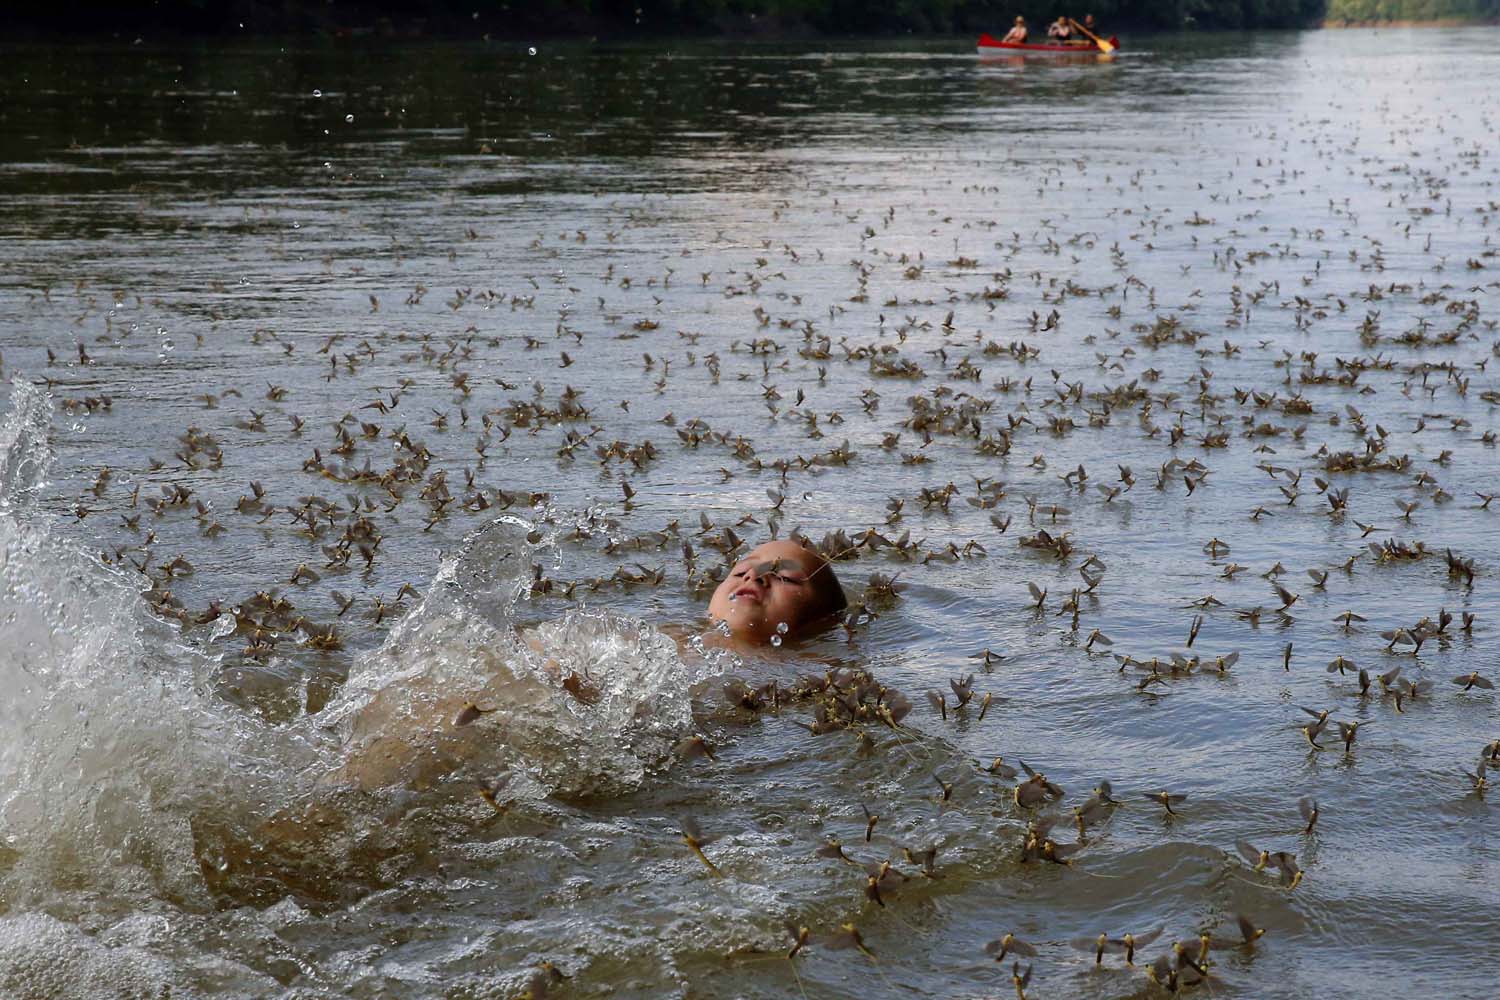 June 23, 2013. A Hungarian boy swims with long-tailed mayflies (Palingenia longicauda) at Tisza river near Tiszainoka 84 miles southeast of Budapest.